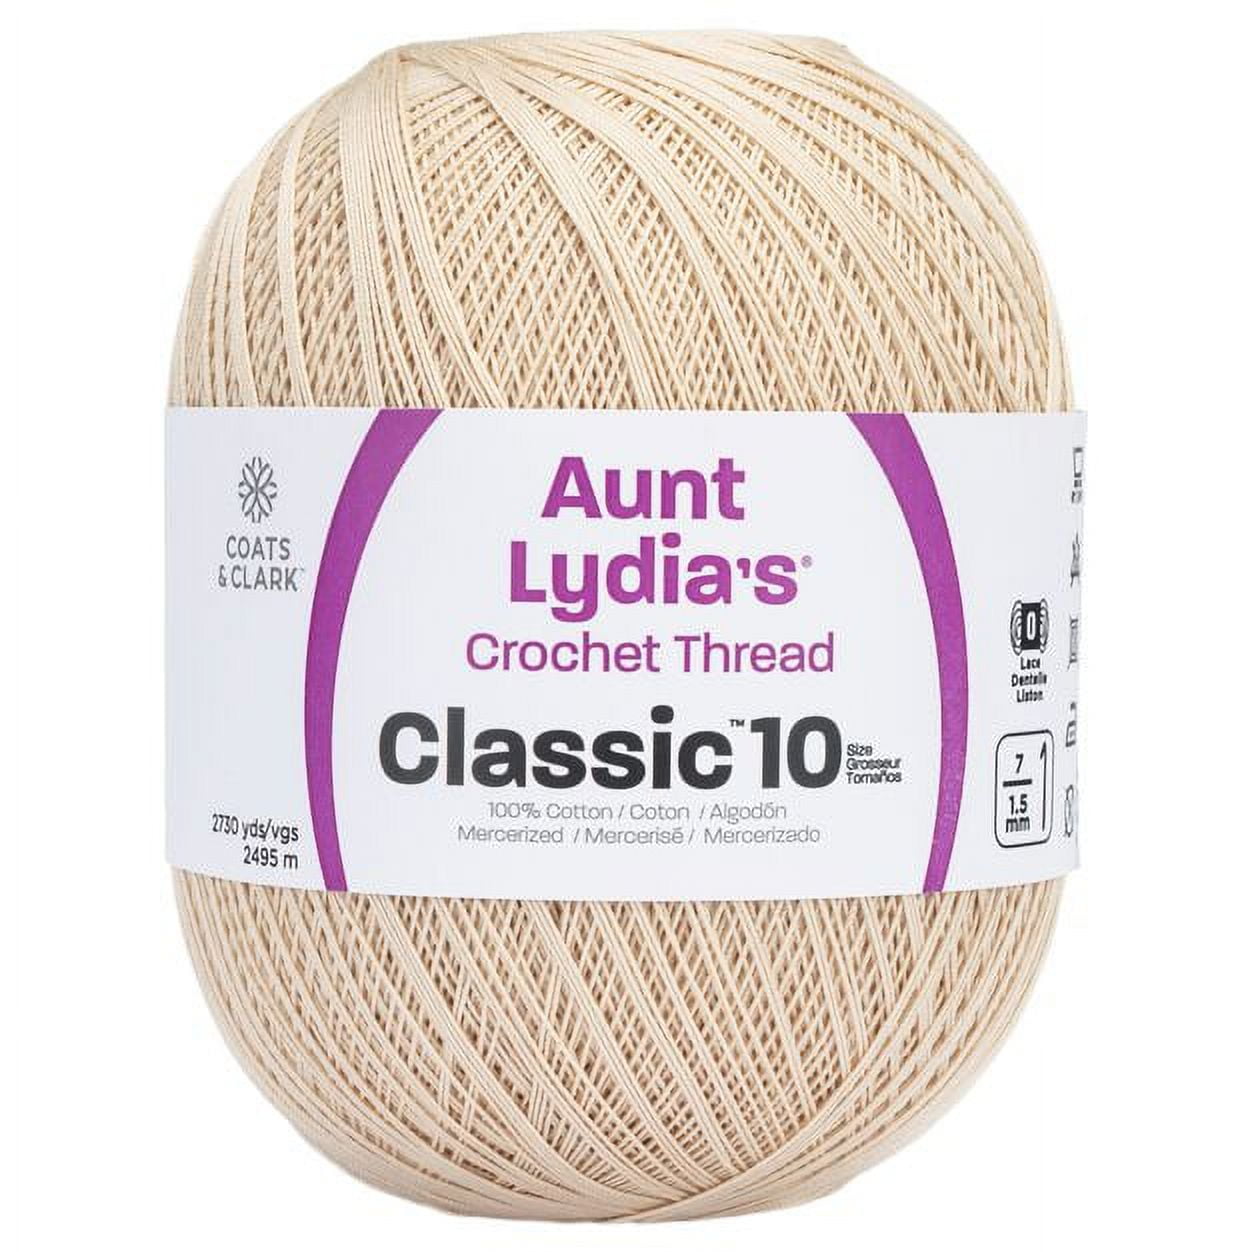 Aunt Lydia's Classic Crochet Thread Size 10-Navy, 1 count - City Market